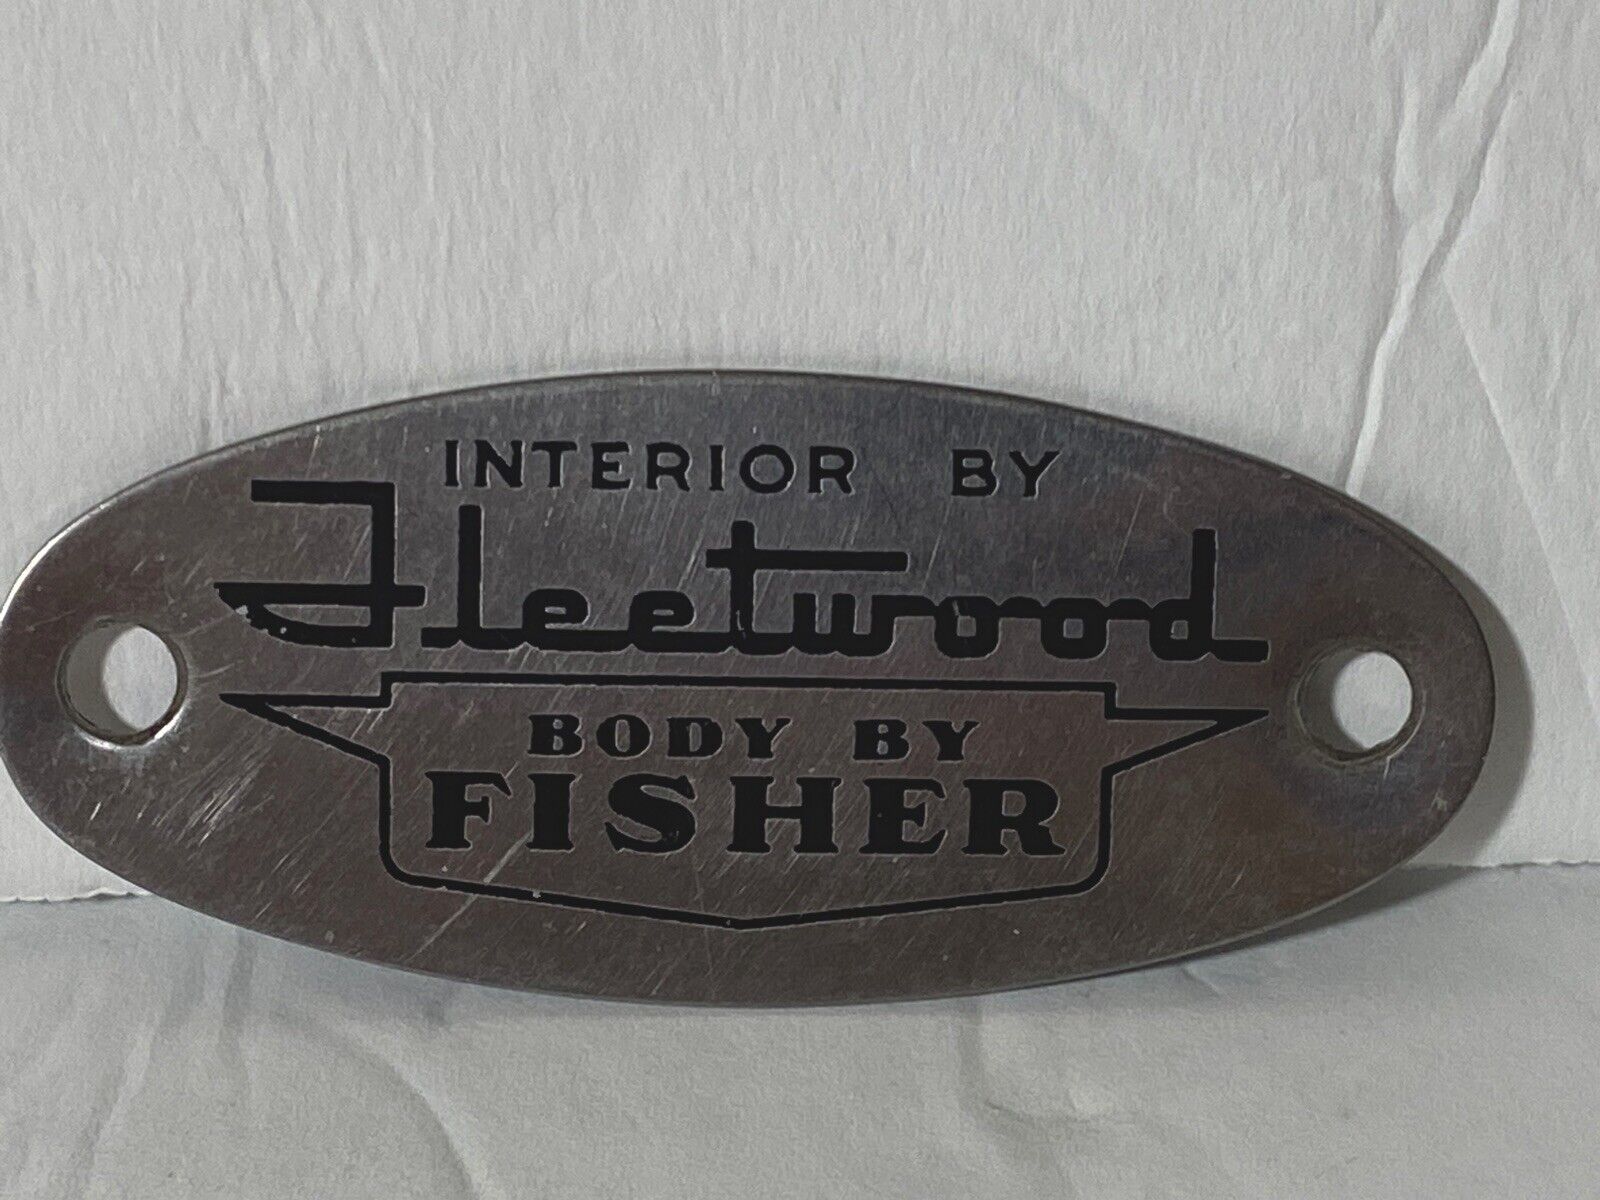 Vintage Body By Fisher Interior By Fleetwood Ova l Metal Emblem Original